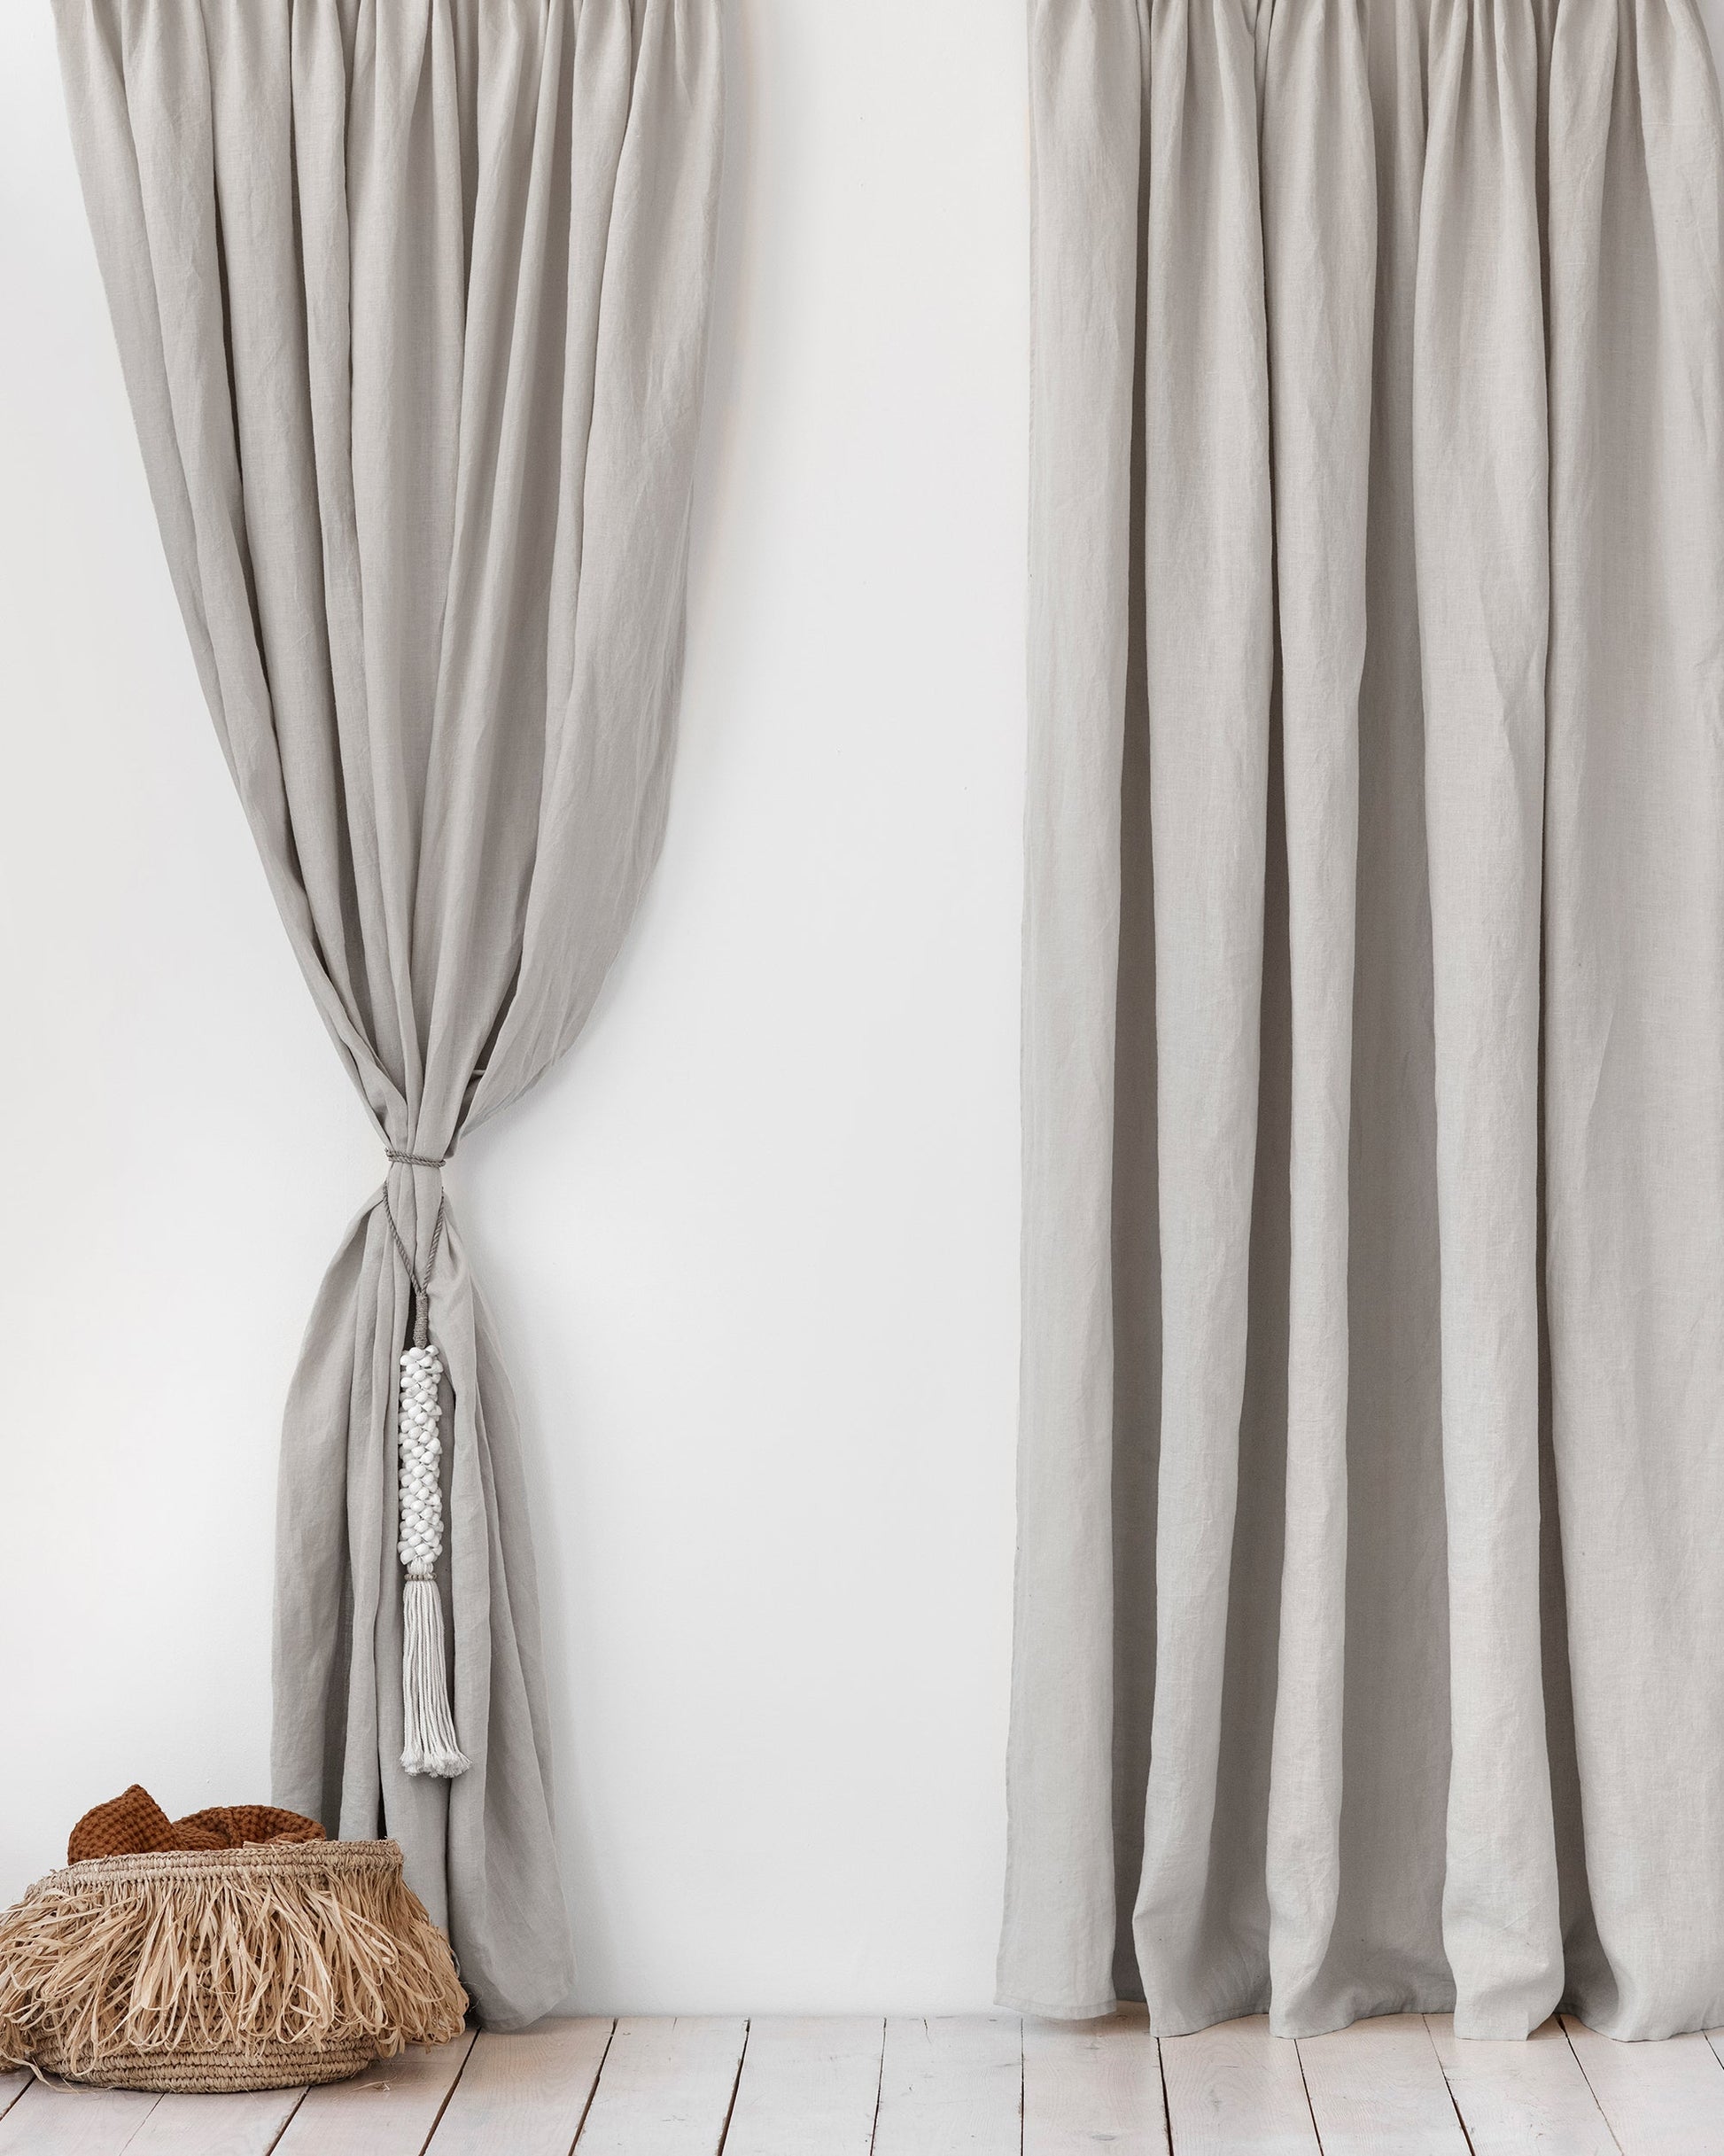 Pencil pleat linen curtain panel (1 pcs) in Light gray - MagicLinen